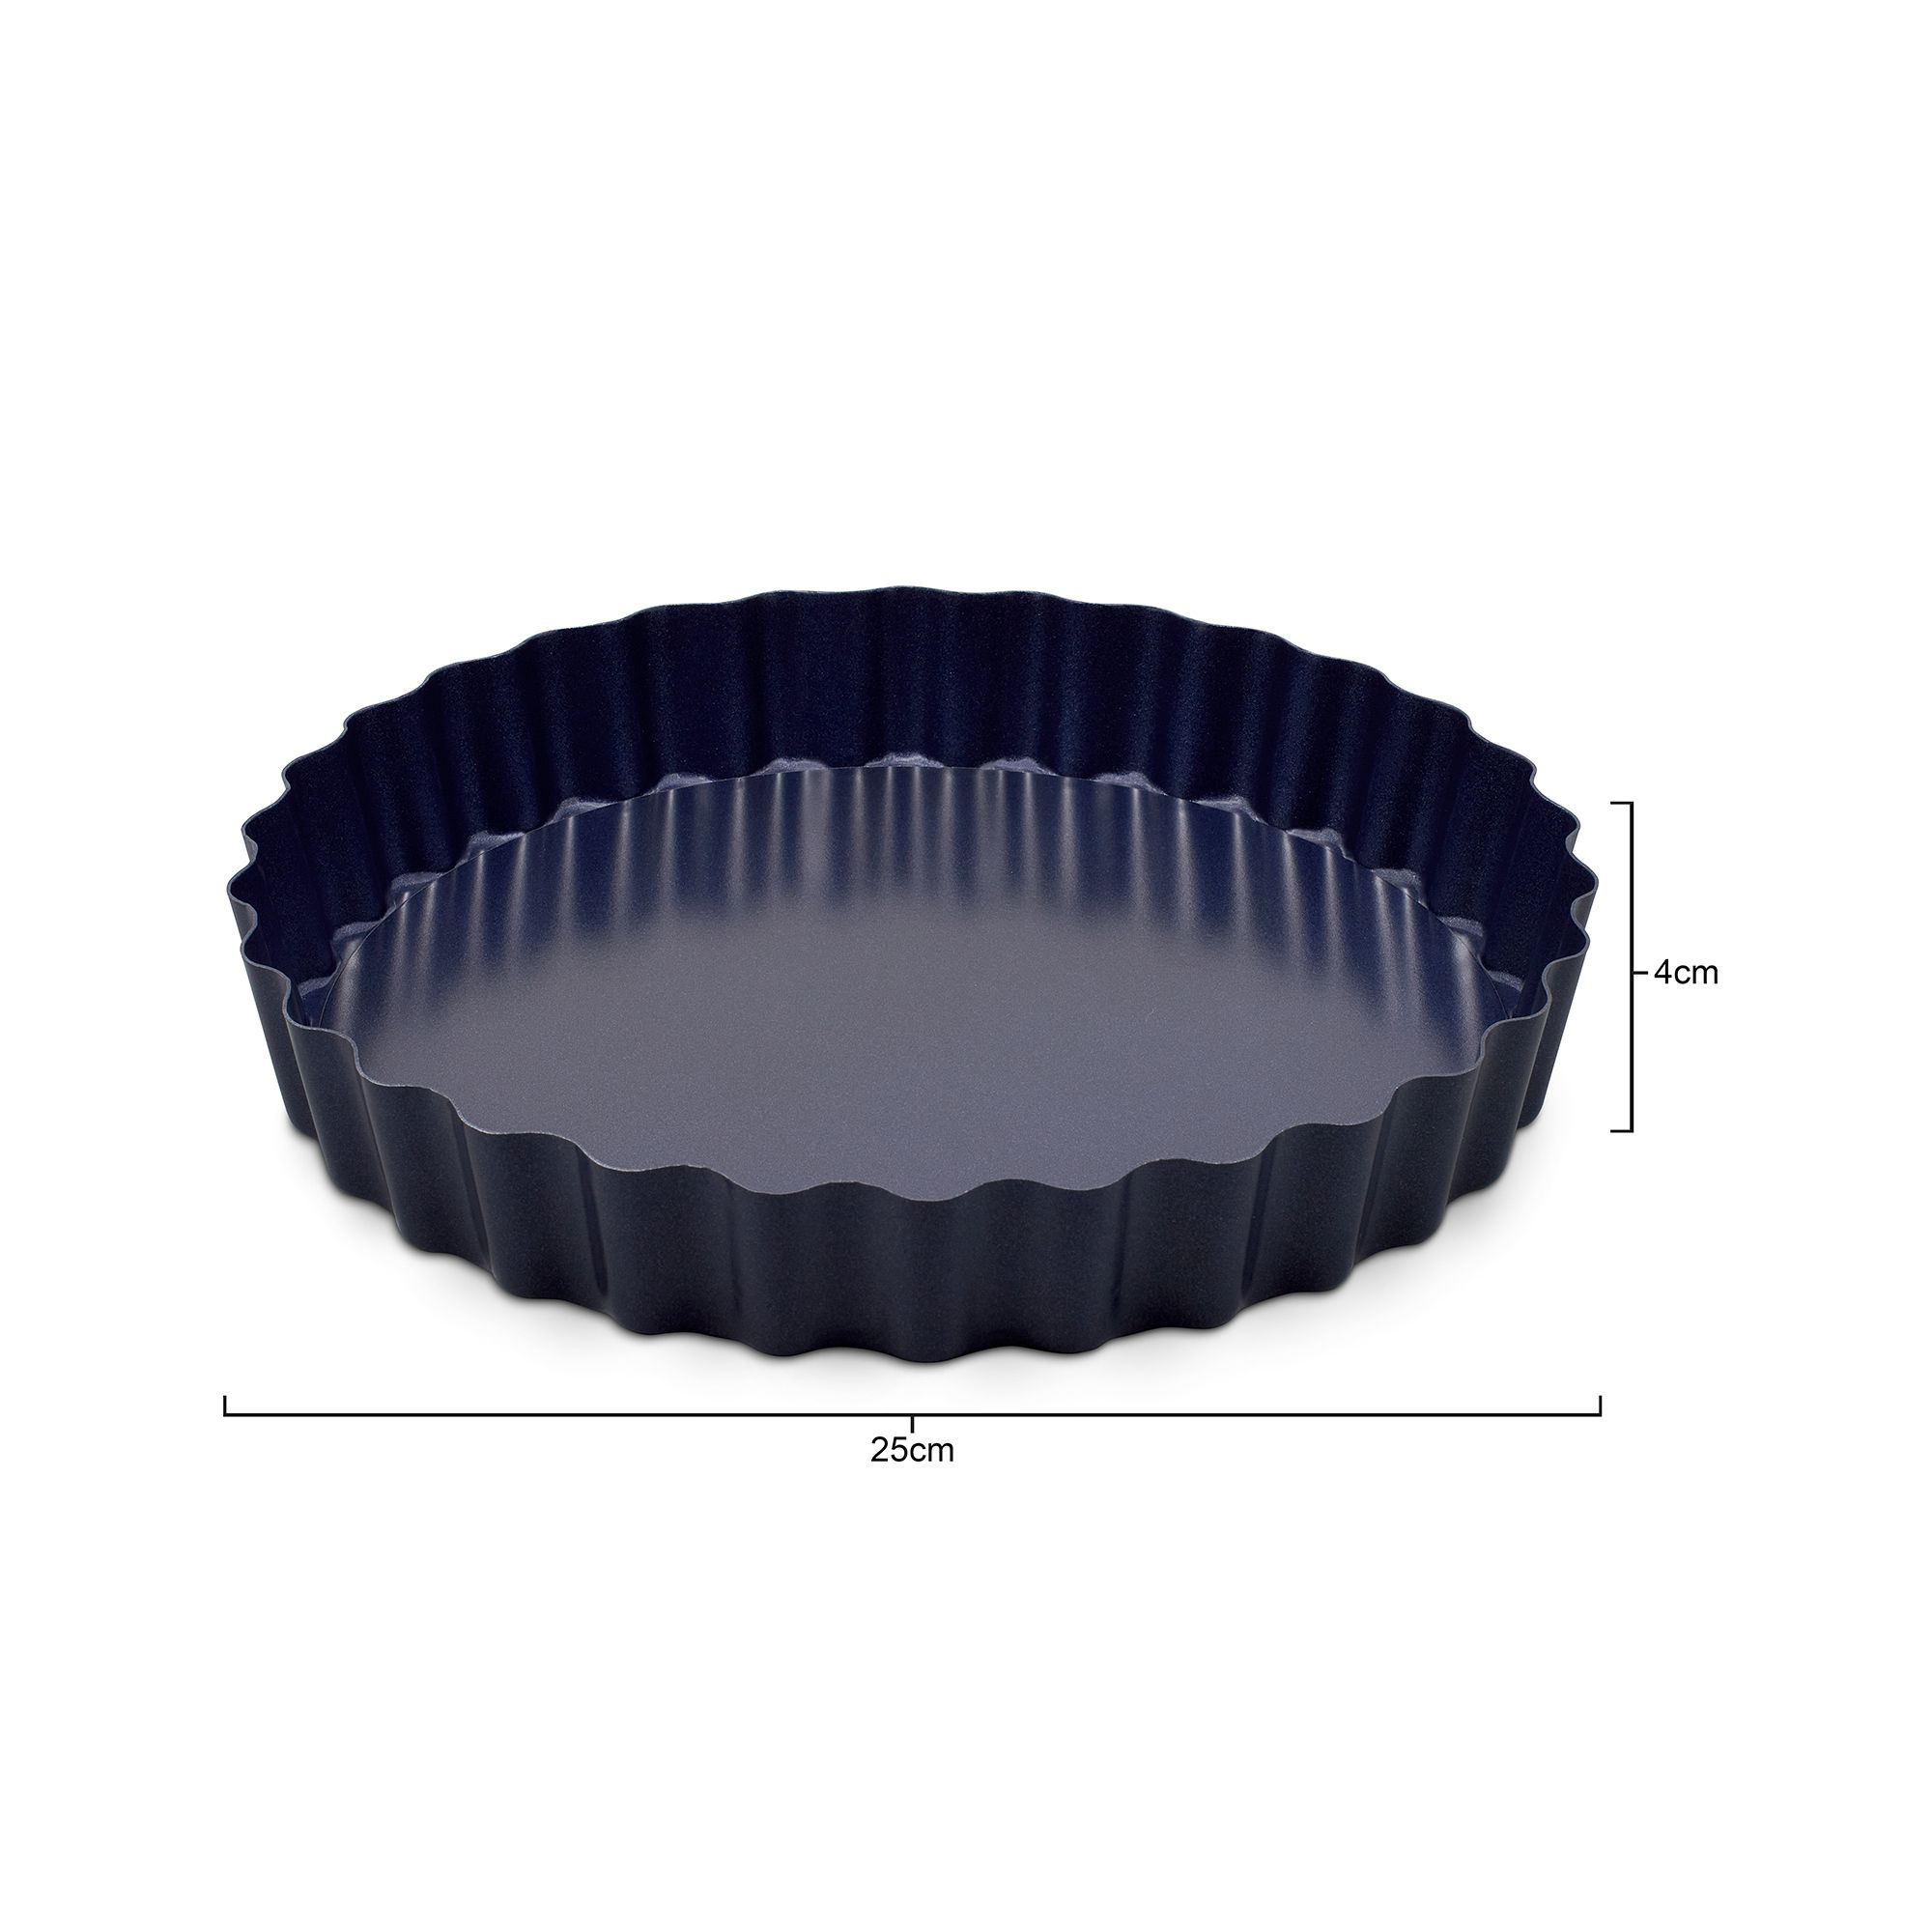 ZYLISS - Tart tin with non-stick coating - 25 cm